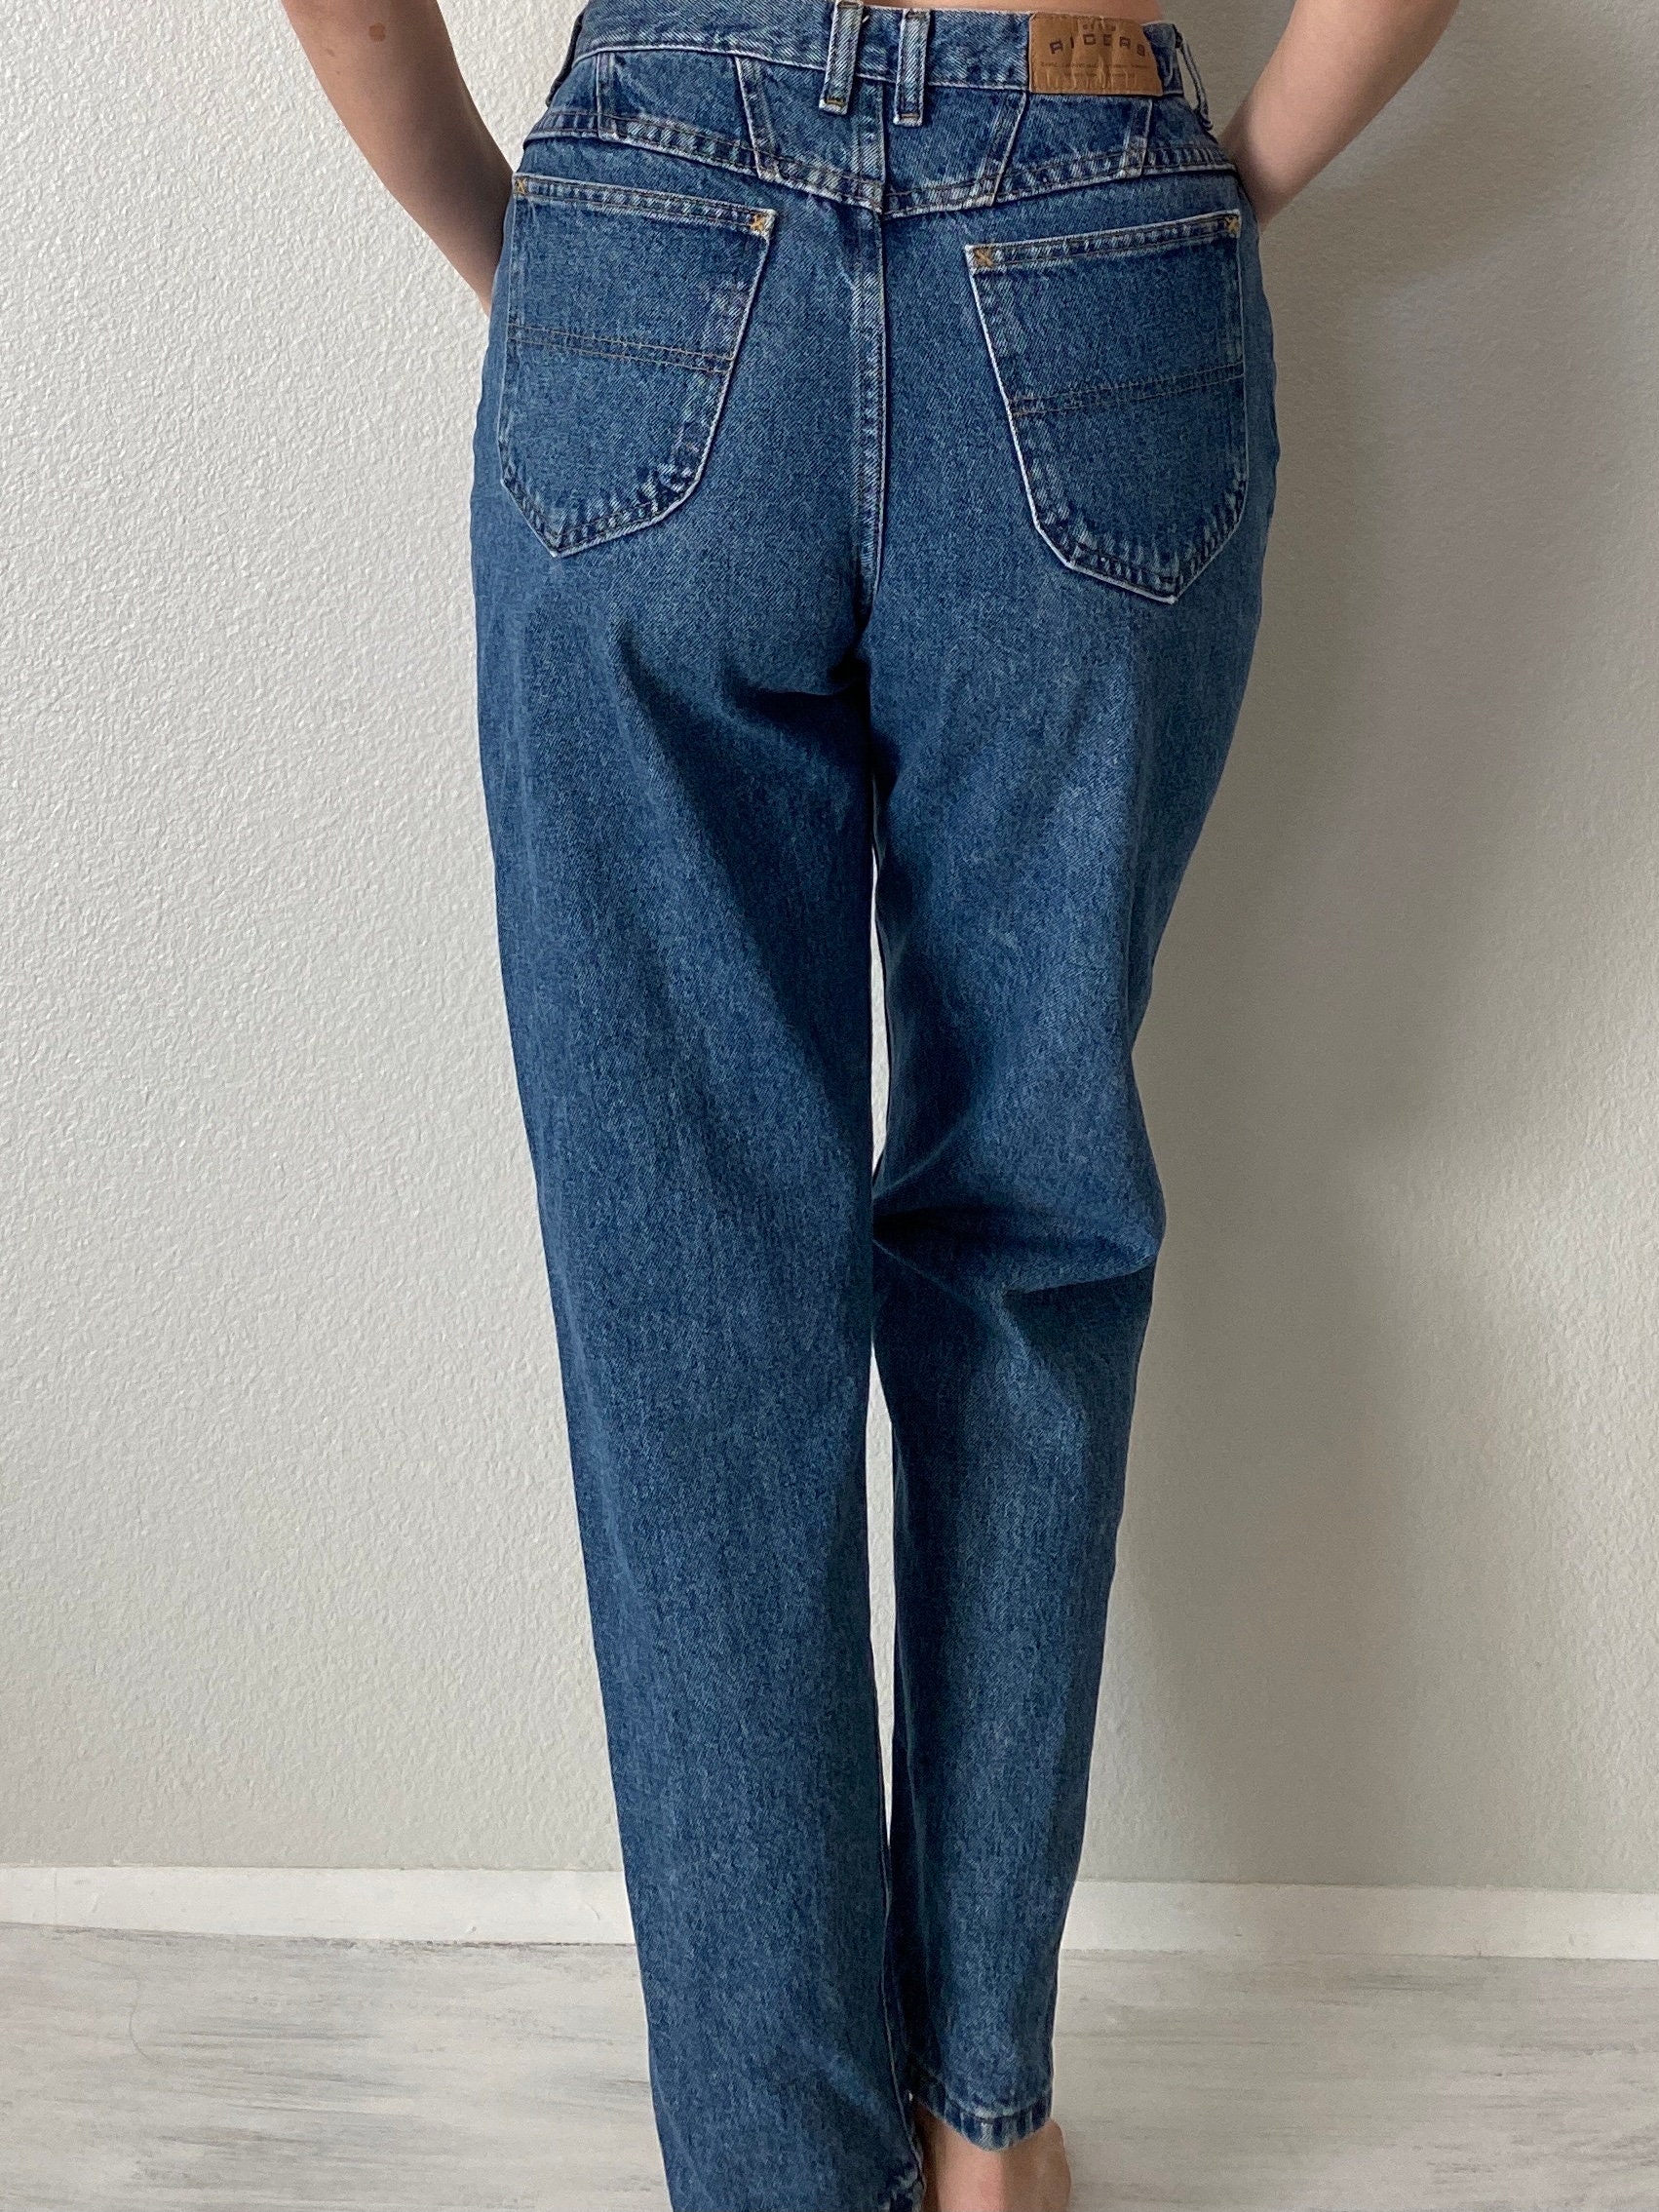 Vintage High Waist Mom Jeans Darted Waist Skinny Tapered Leg | Etsy